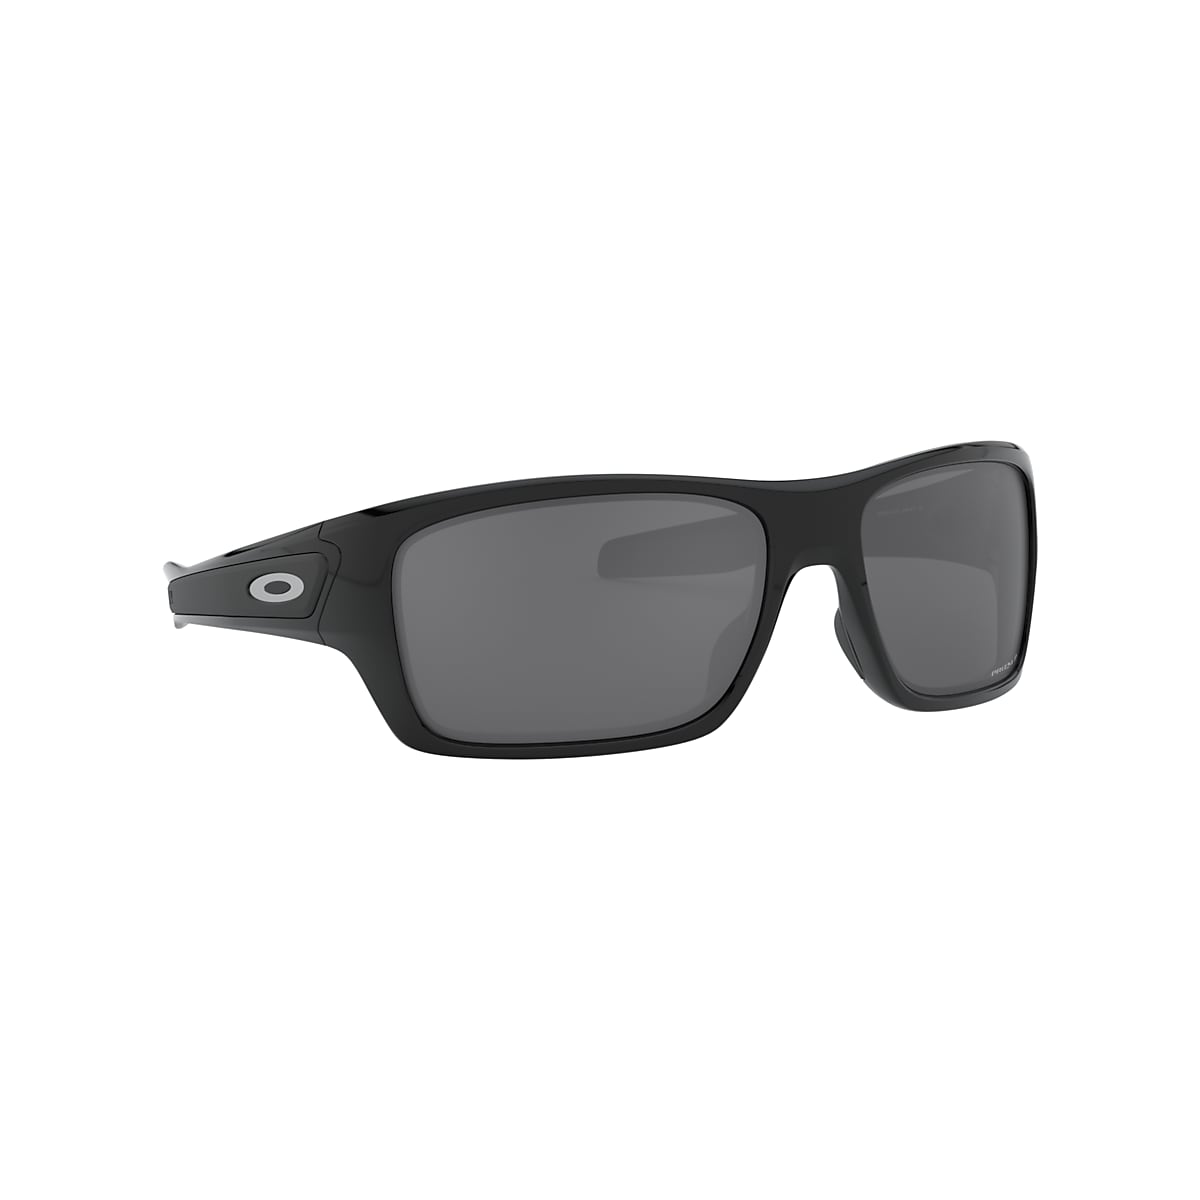 Oakley 0OO9263 Sunglasses In Black Target Optical |